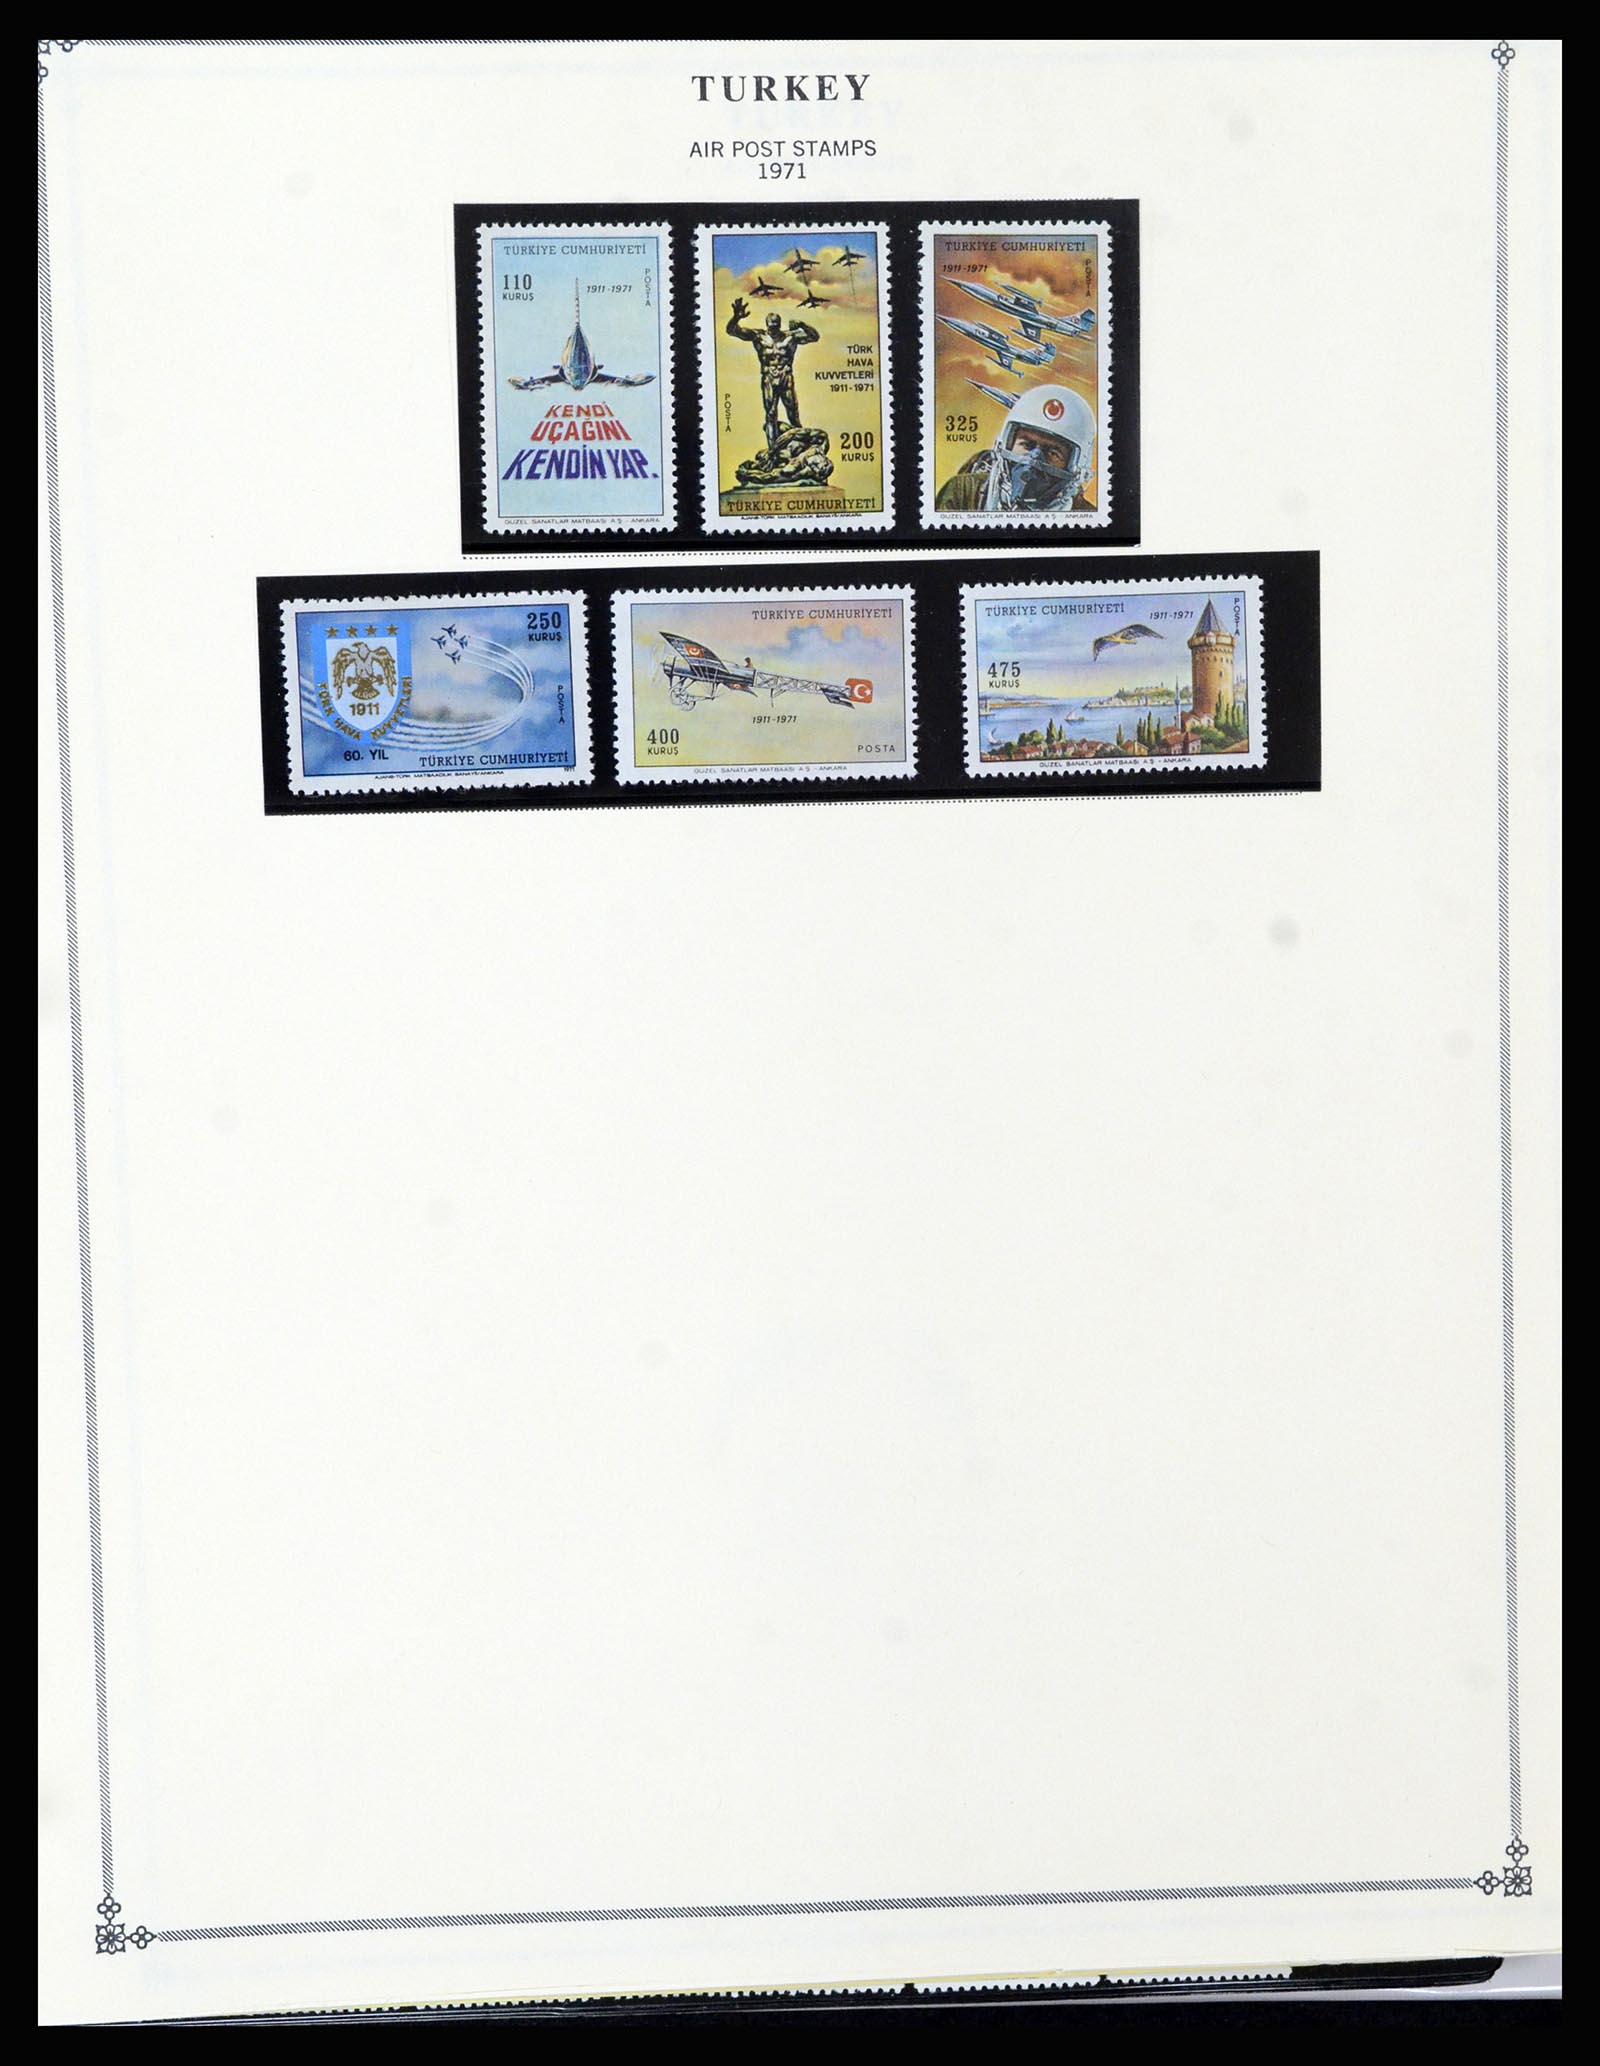 37224 229 - Stamp collection 37224 Turkey 1863-2000.